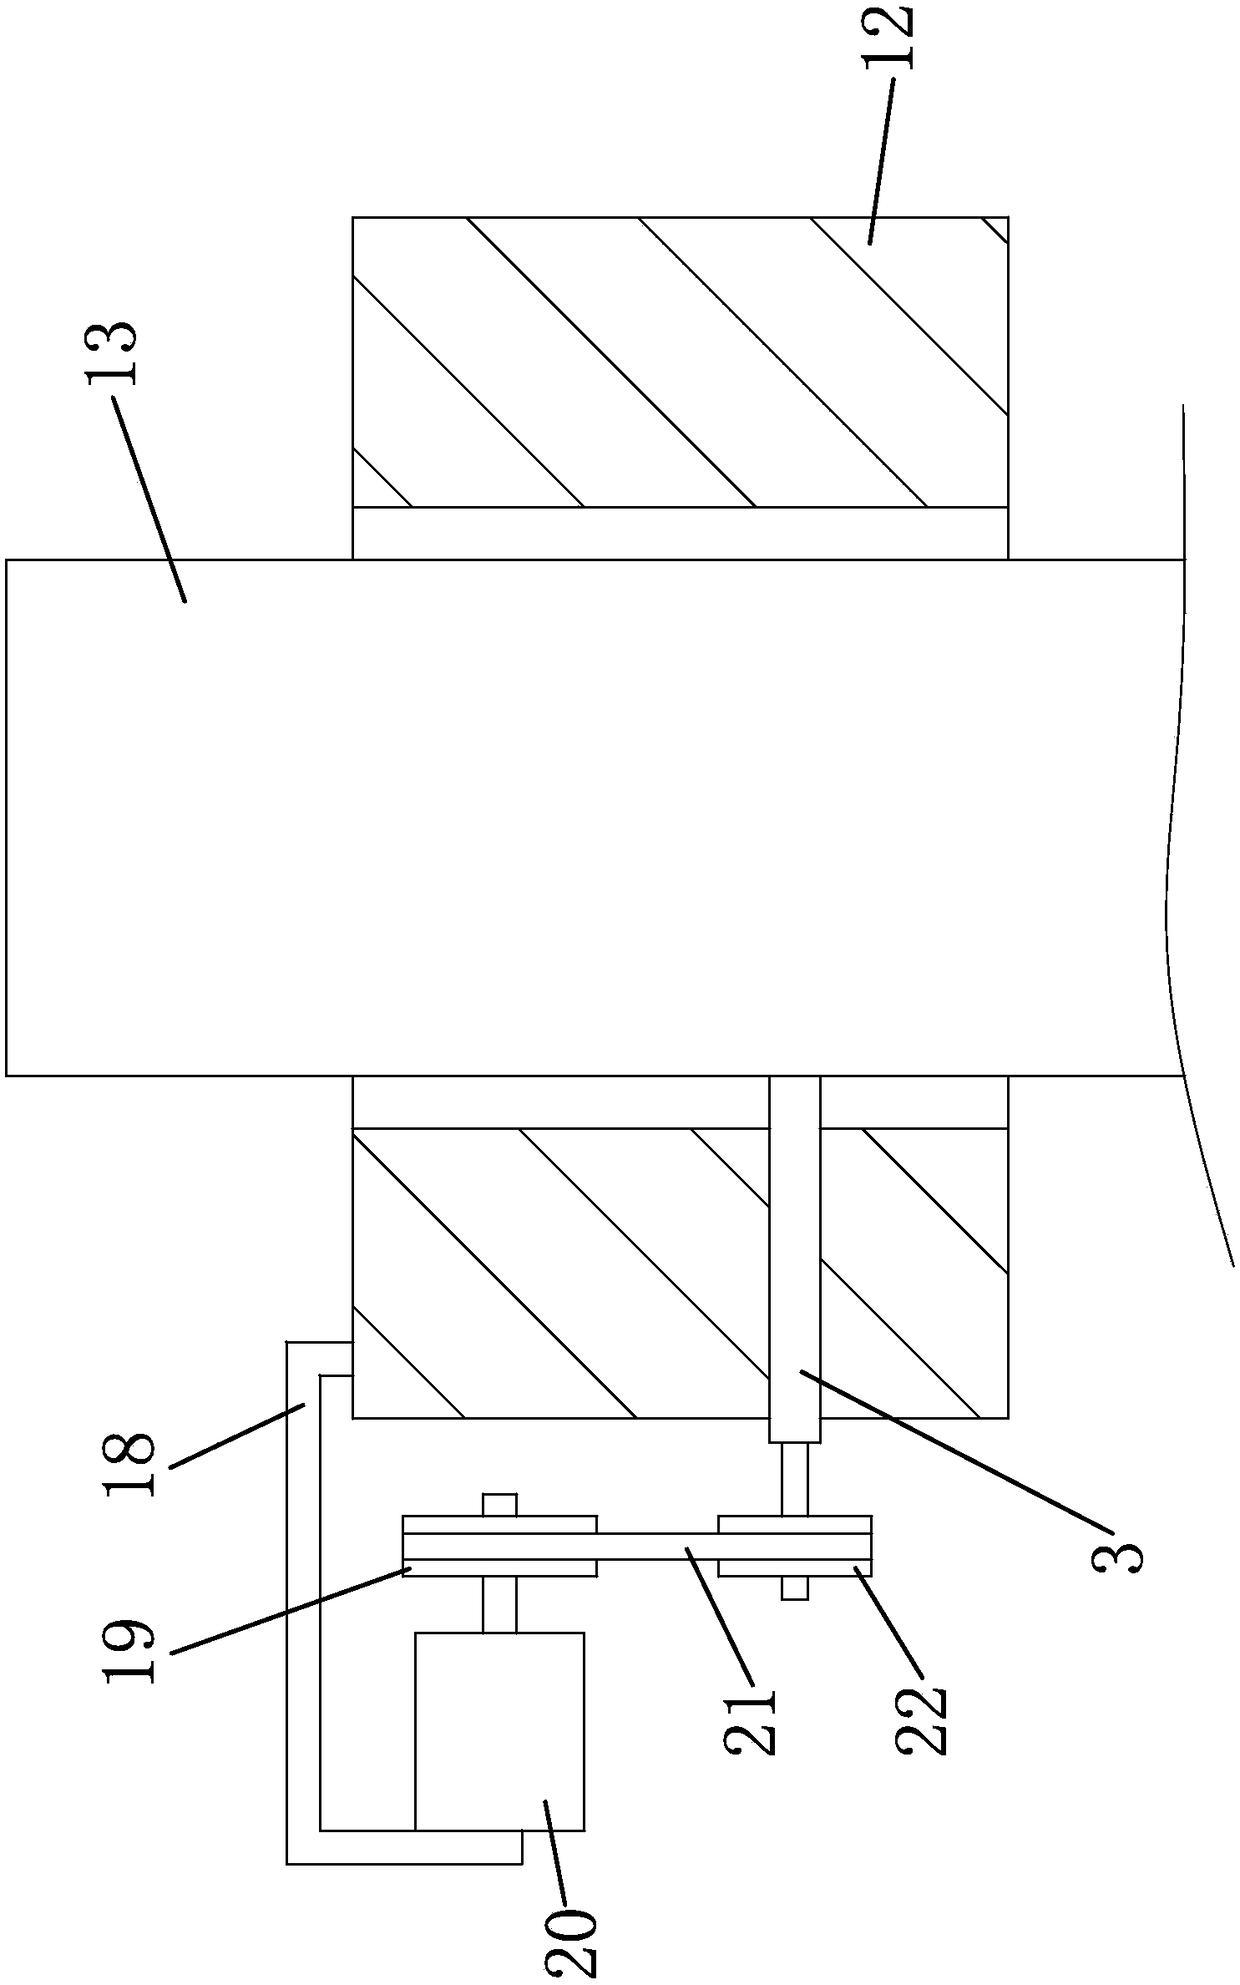 Production method of nano-anion textile fabric